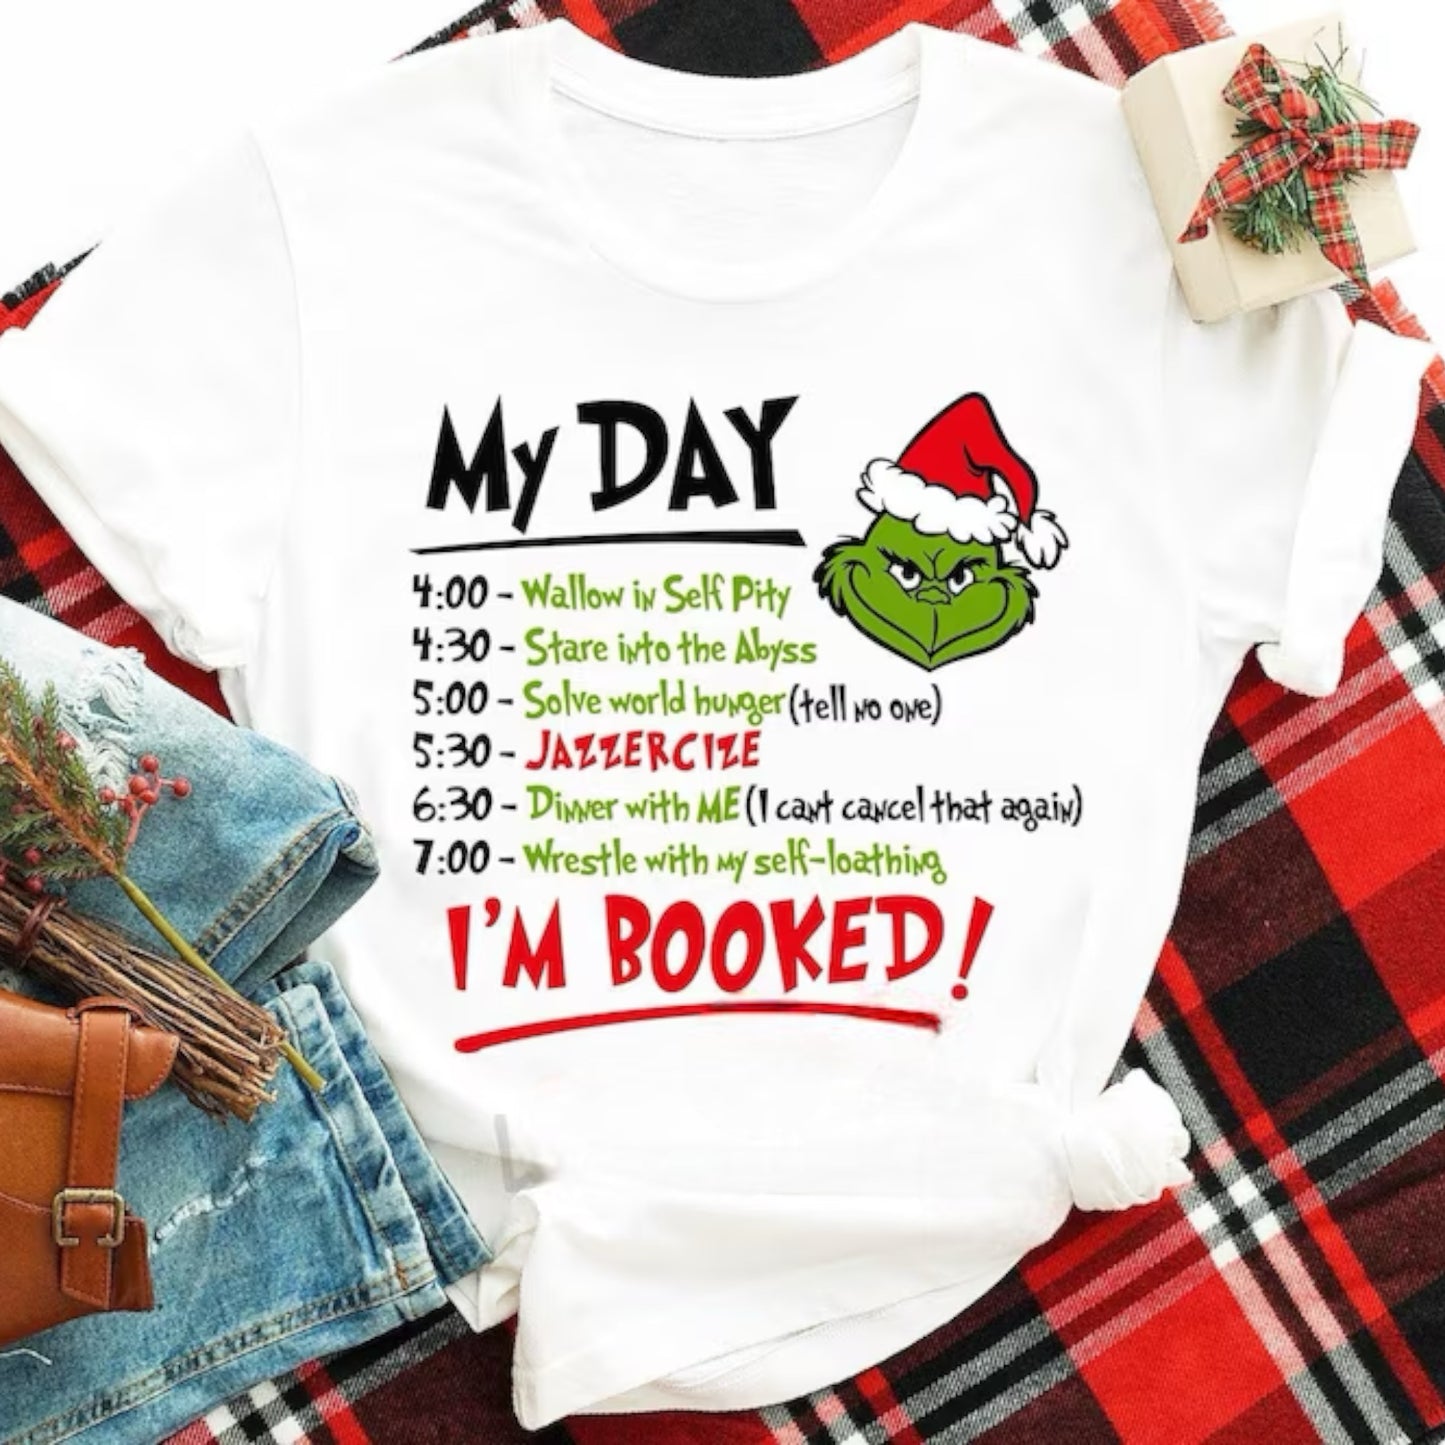 I’m Booked- Tee or Crewneck Sweatshirt